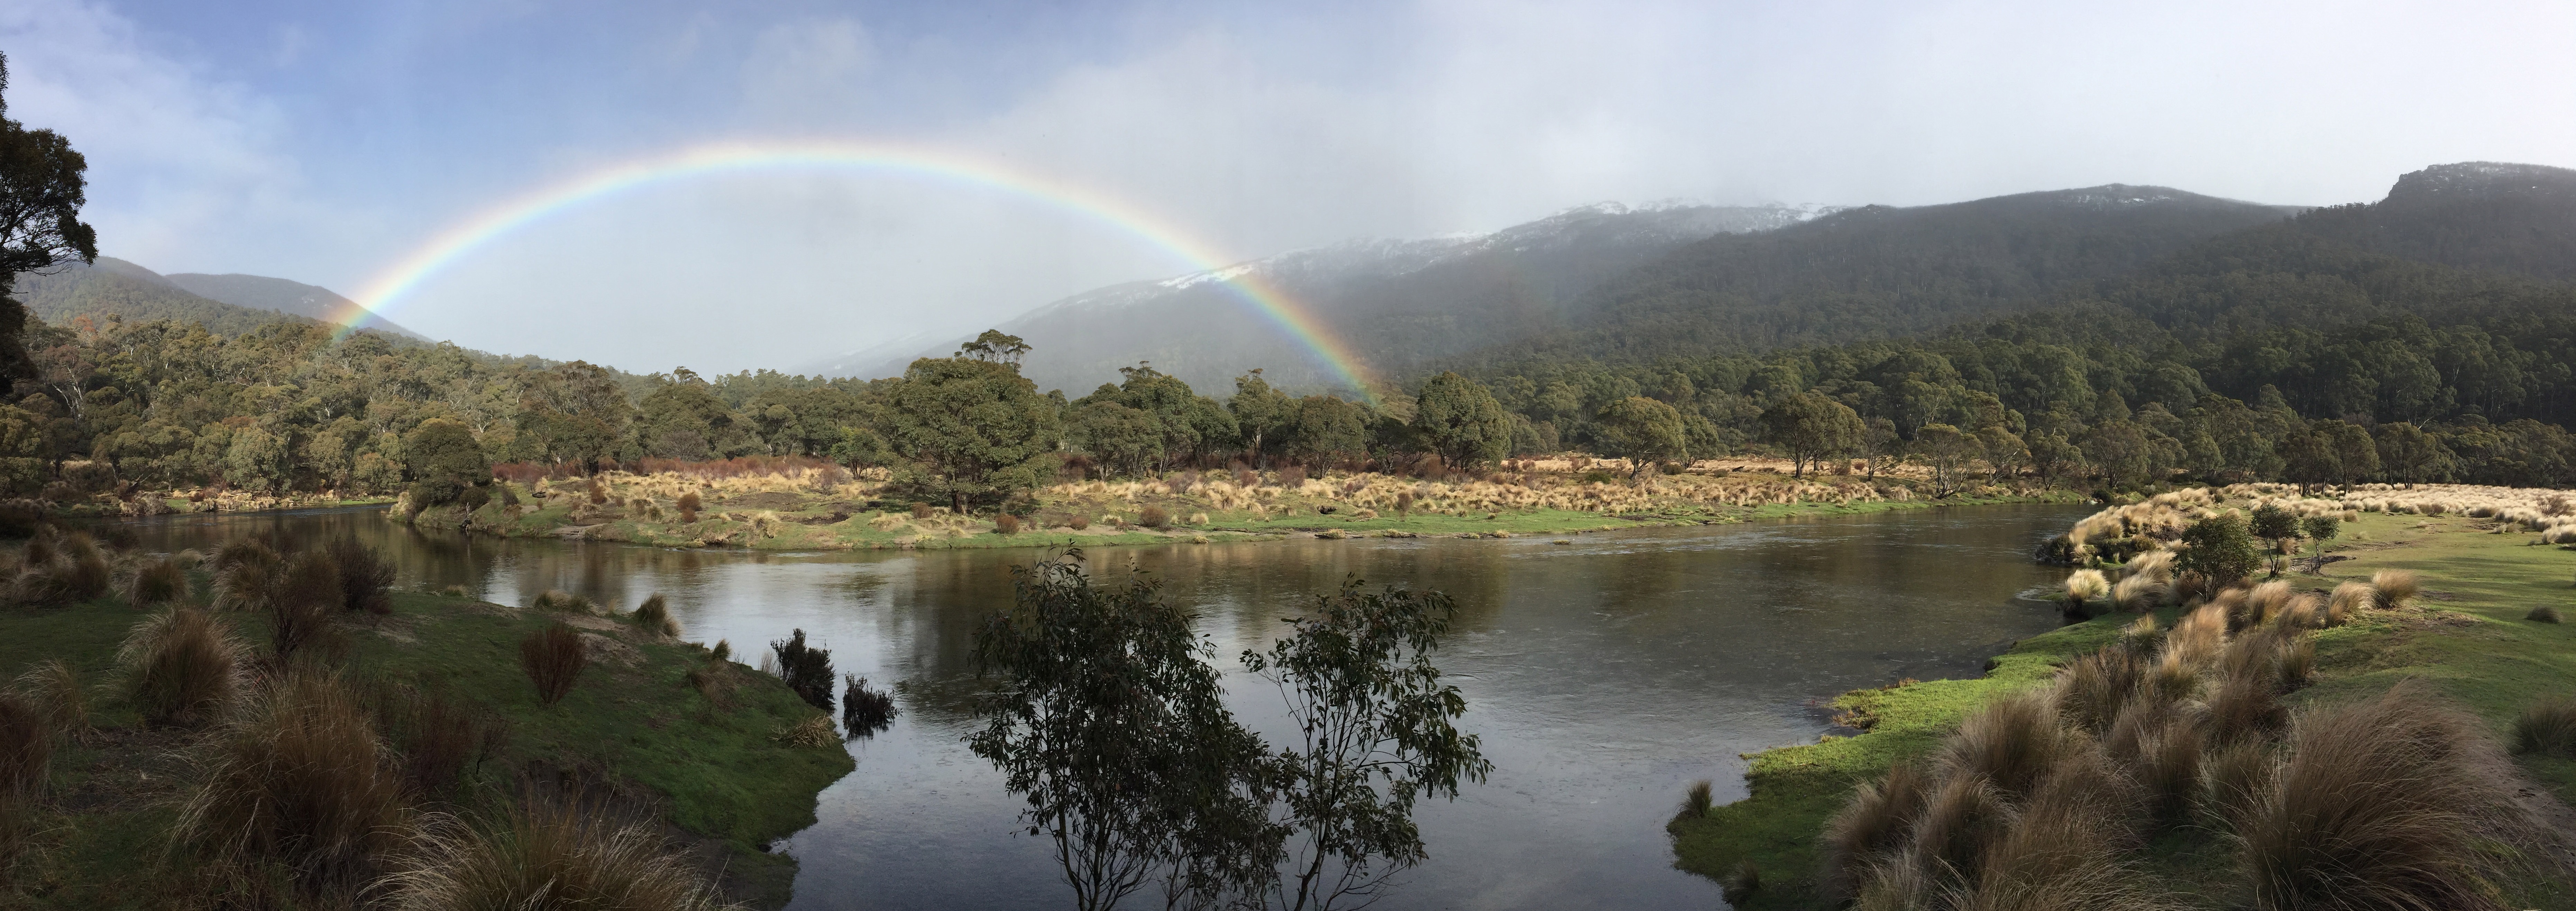 Rainbow over the Thredbo River, Thredbo Diggings.jpg